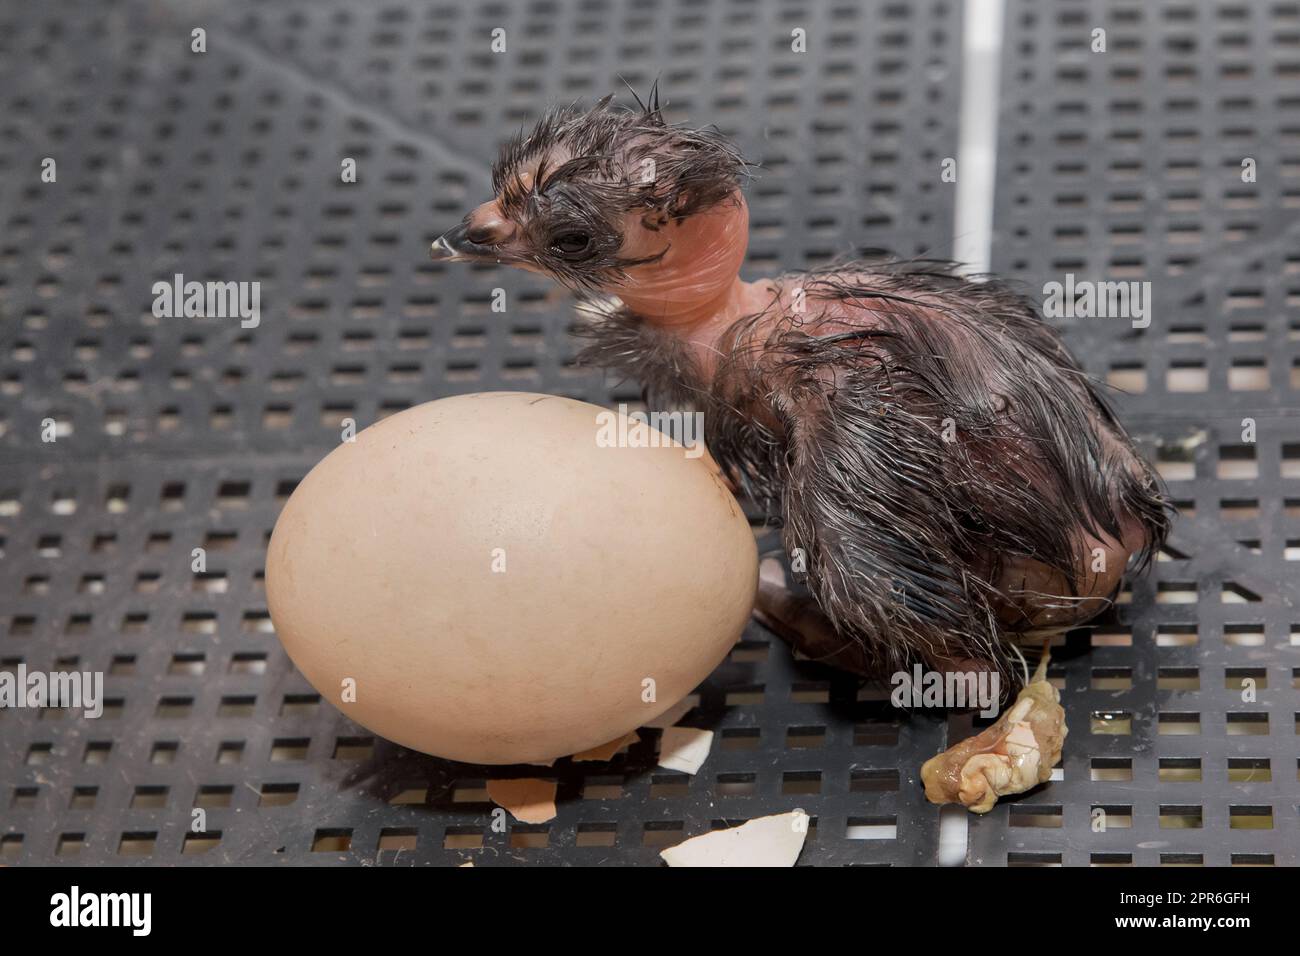 https://c8.alamy.com/comp/2PR6GFH/close-up-of-newborn-dark-cute-little-chick-next-to-hatching-egg-in-incubator-poultry-farming-2PR6GFH.jpg